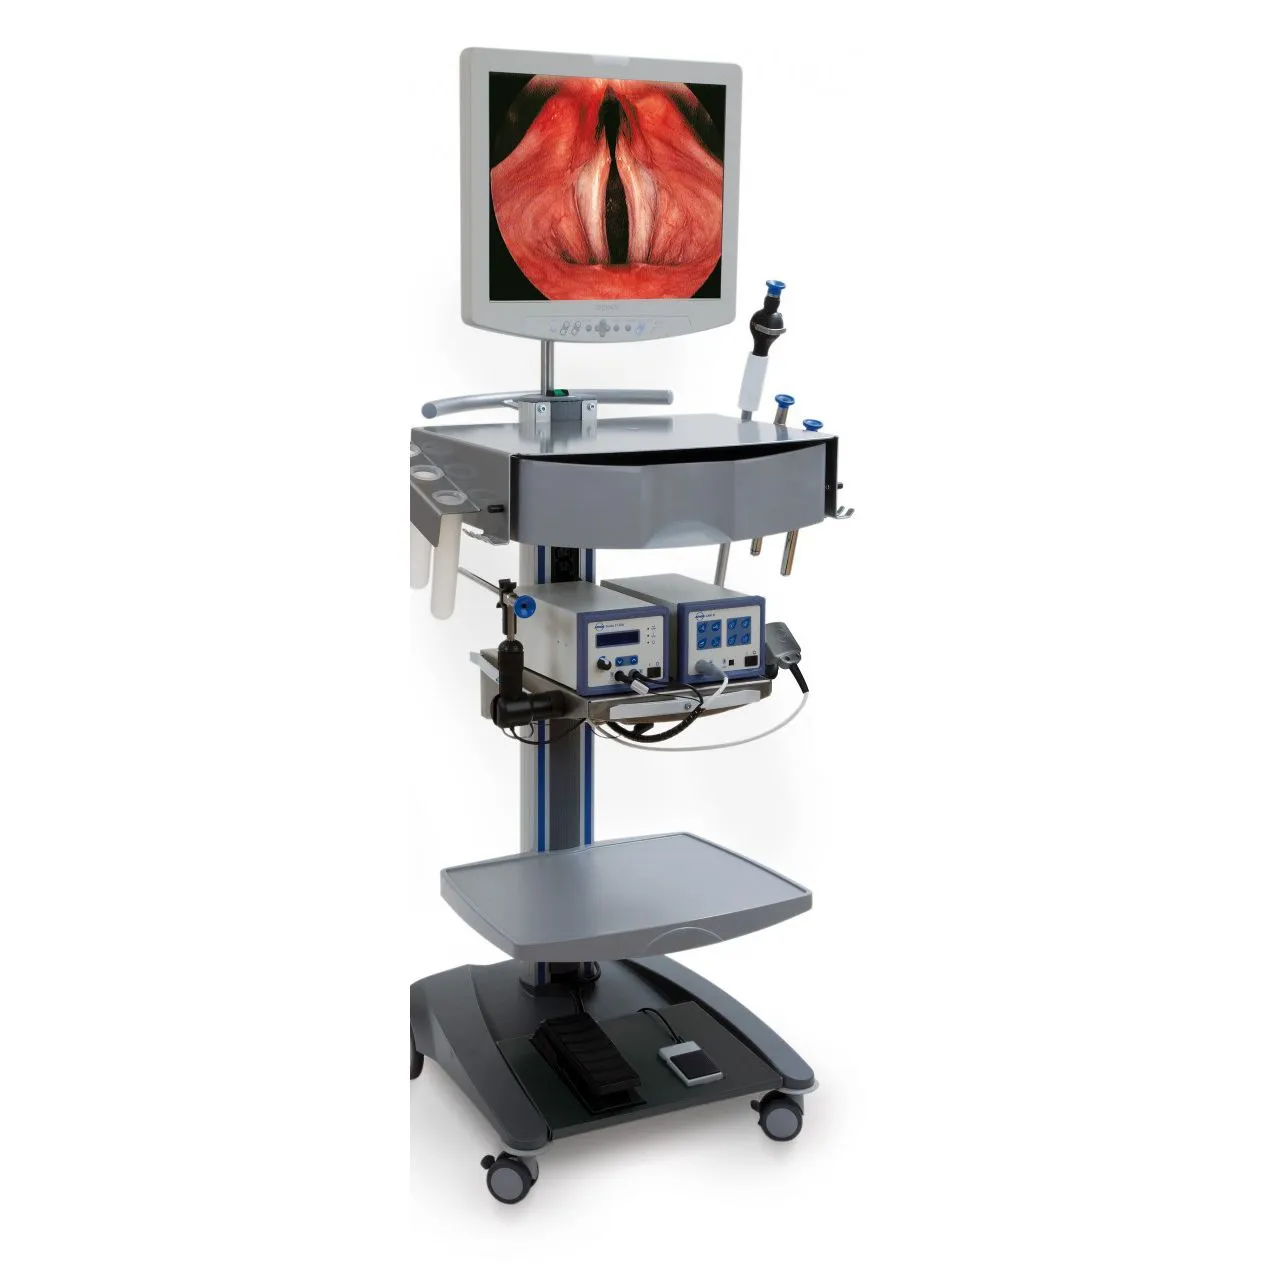 Ackermann Fusion Ginekologik va urologik jarrohlik uchun endoskopik tokchalar#2